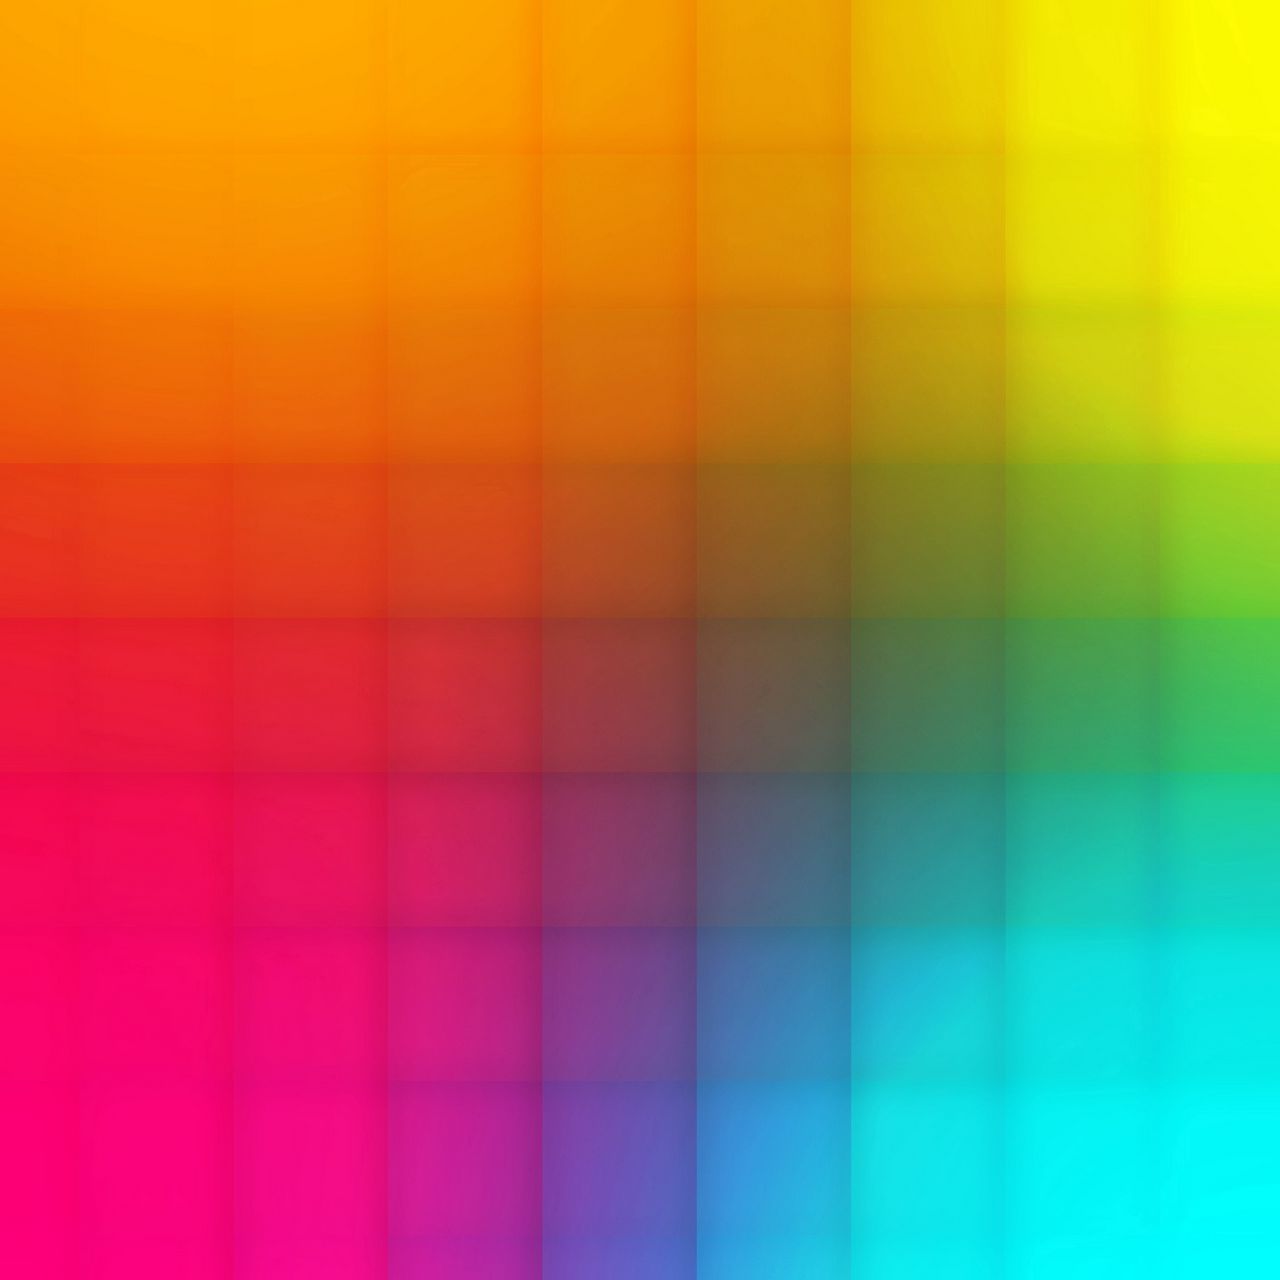 Download wallpaper 1280x1280 squares, background, multi-colored, bright,  diced ipad, ipad 2, ipad mini for parallax hd background